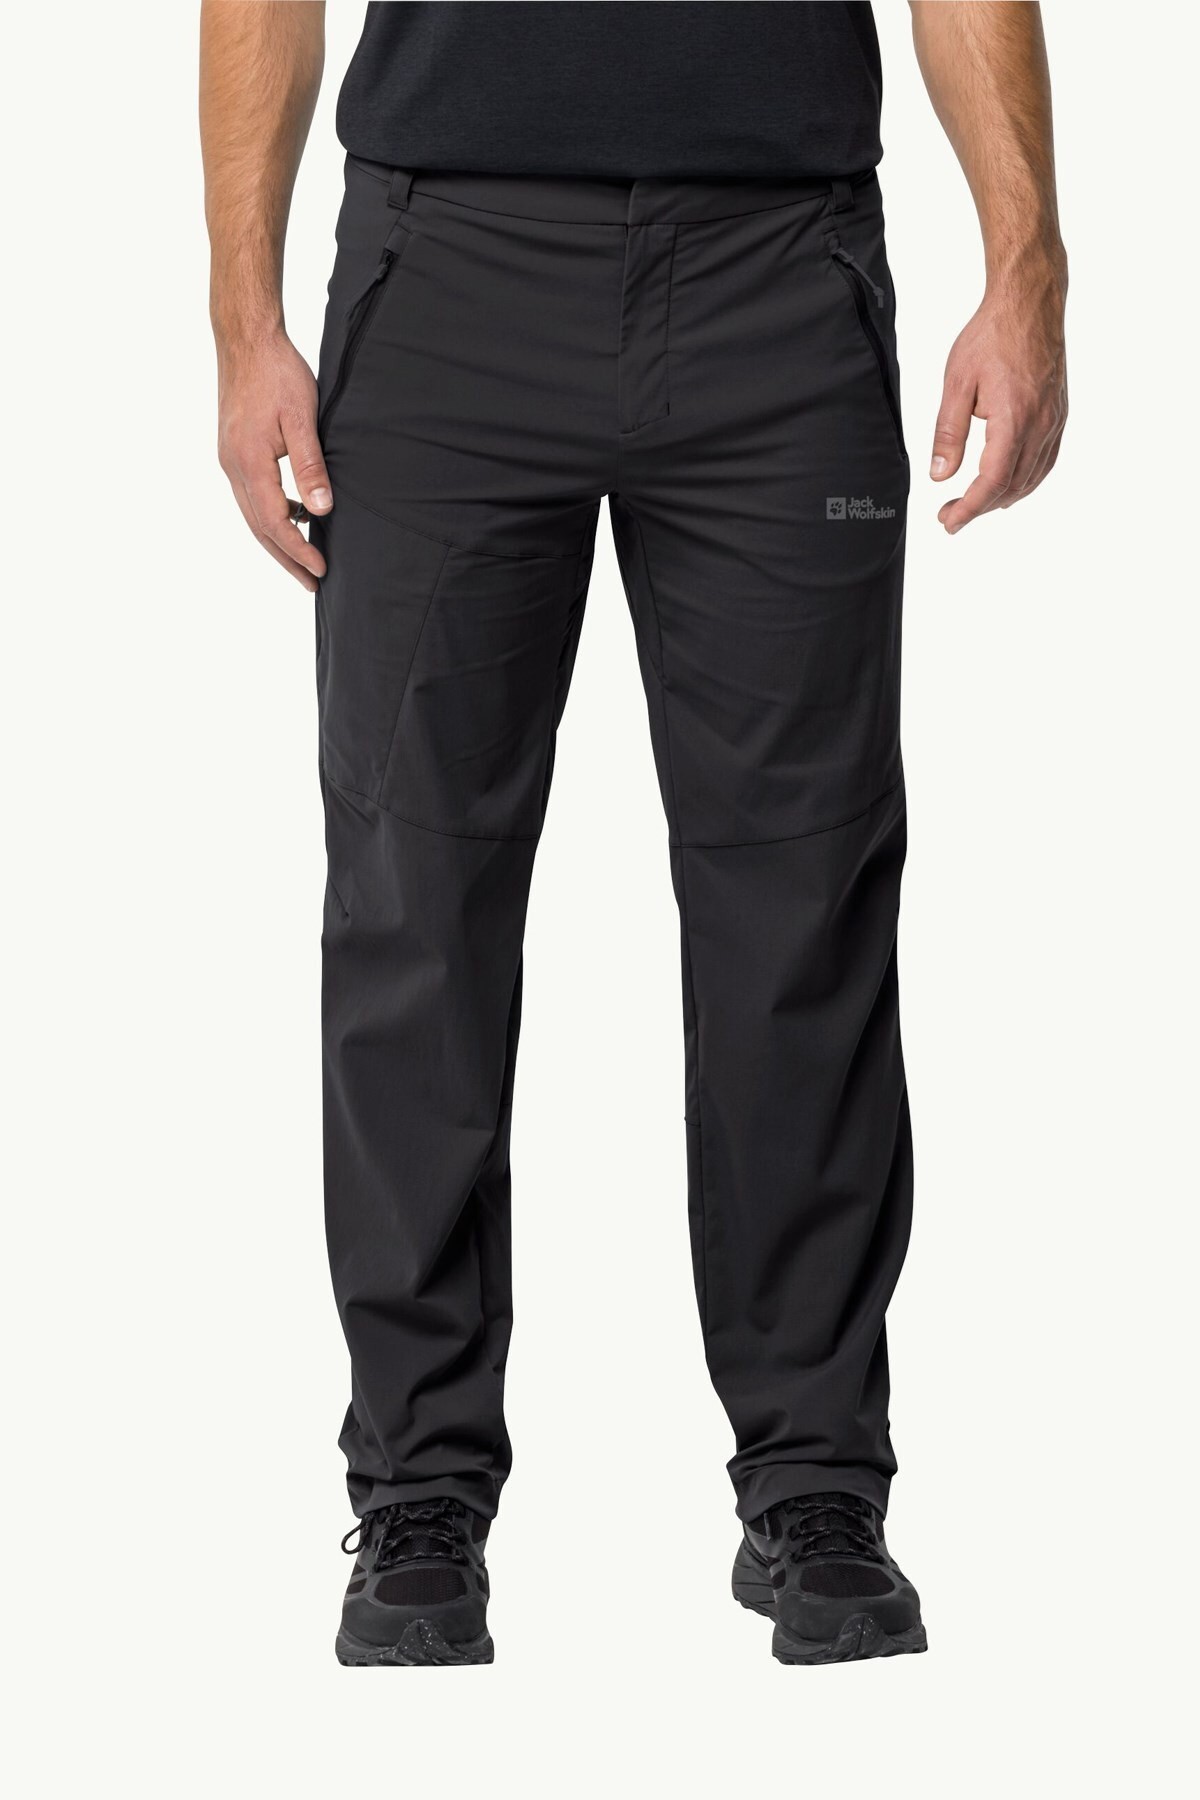 Jack Wolfskın Erkek Glastal Pants M Outdoor Pantolonu Black 1508221-6000